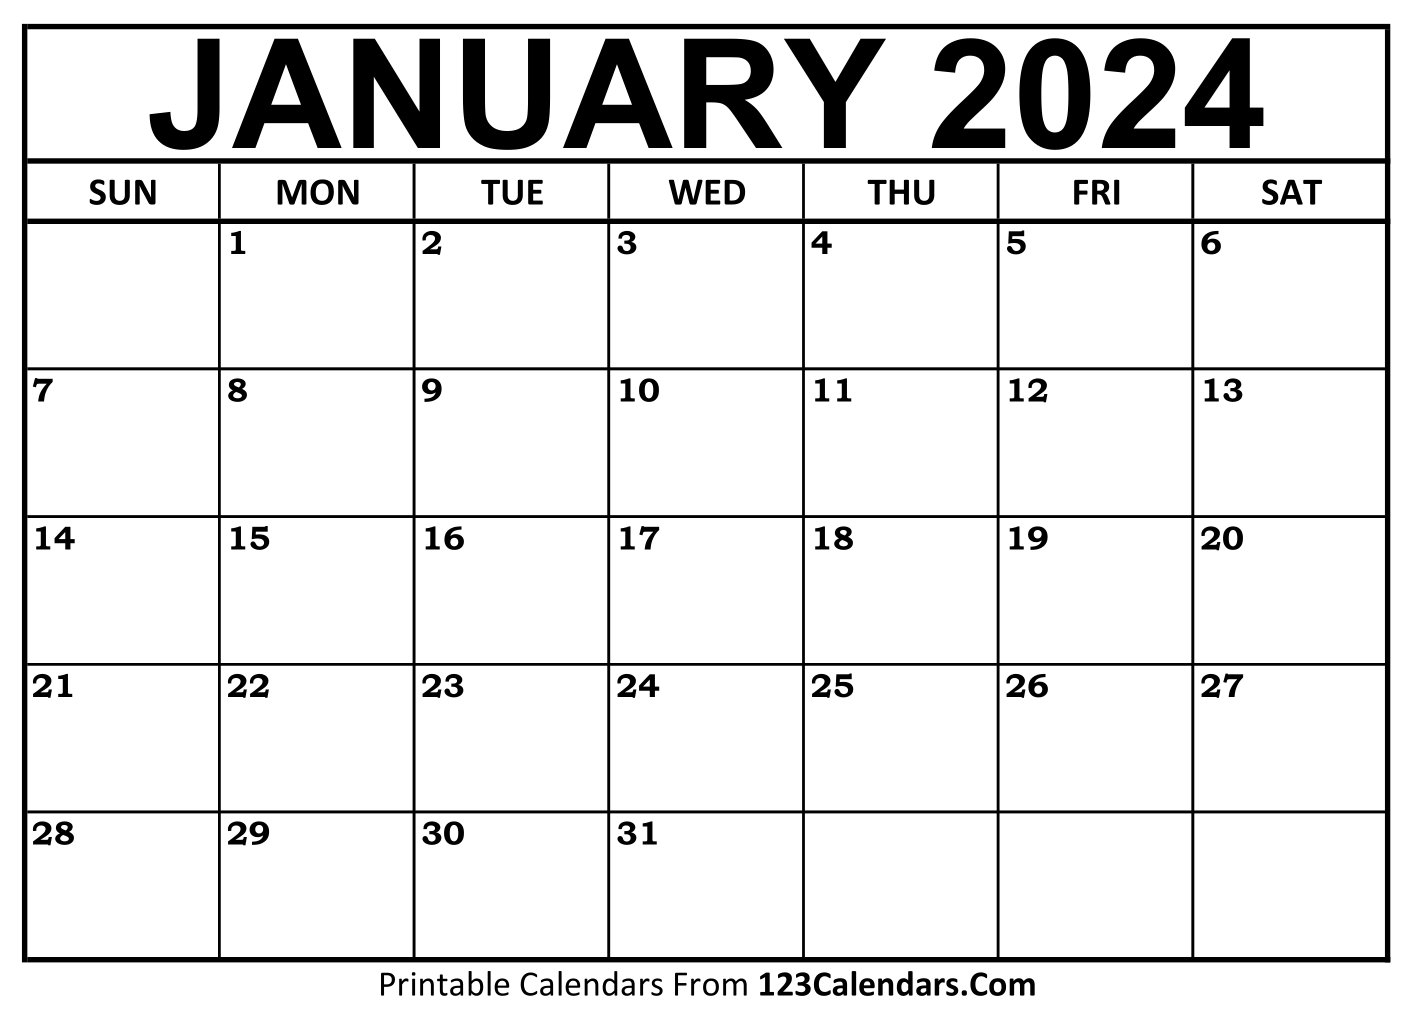 Printable January 2024 Calendar Templates - 123Calendars for Janurary 2024 Printable Calendar